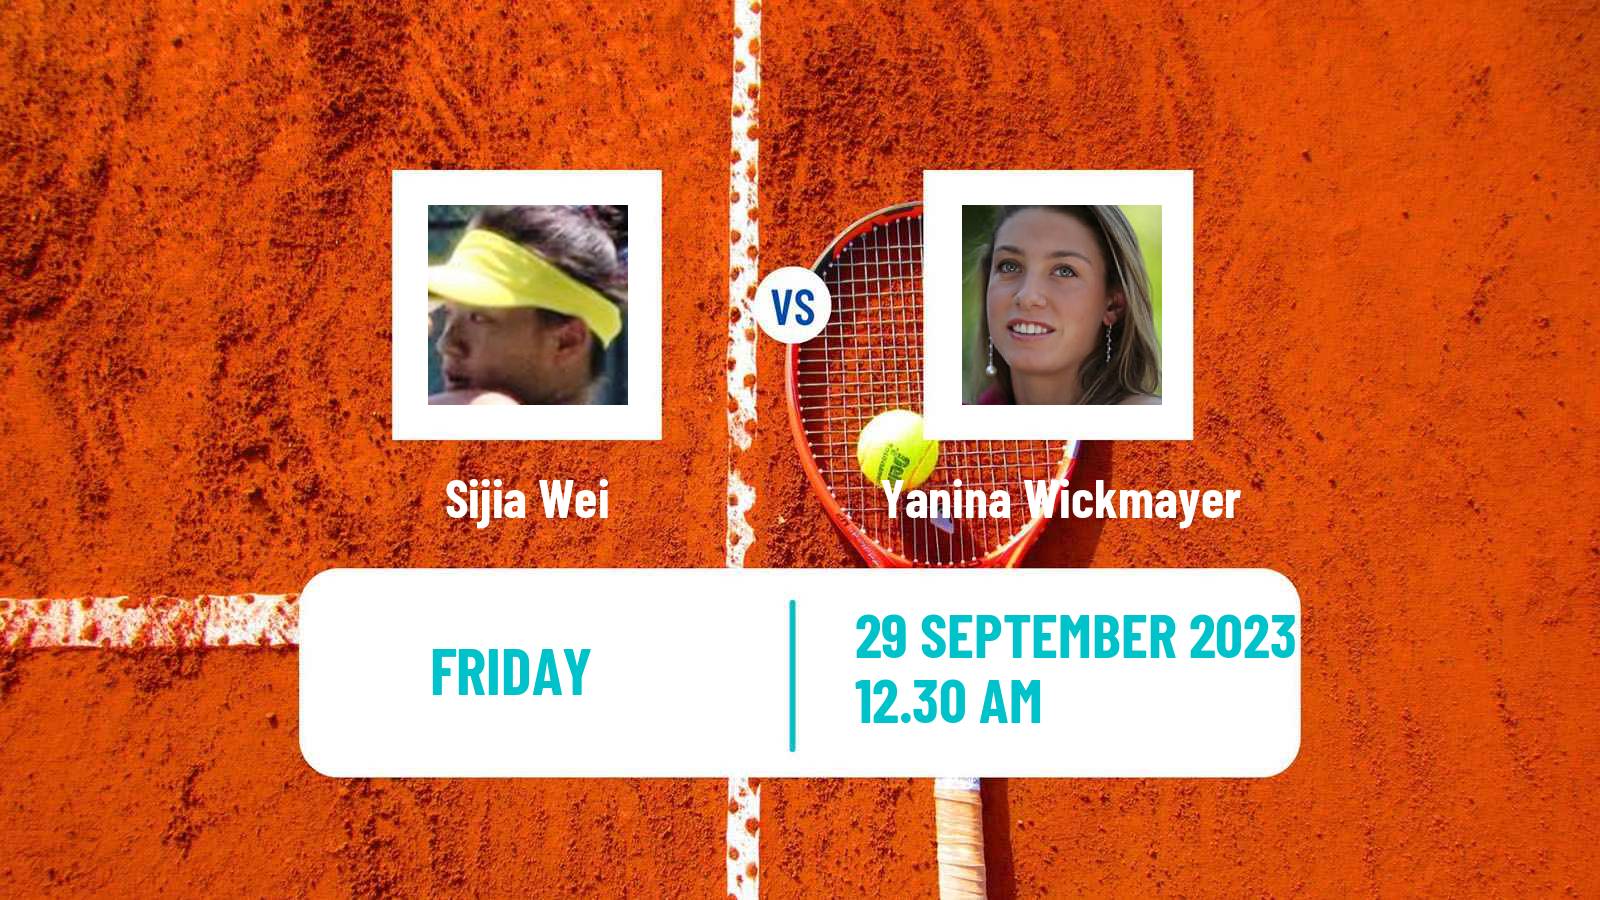 Tennis WTA Beijing Sijia Wei - Yanina Wickmayer